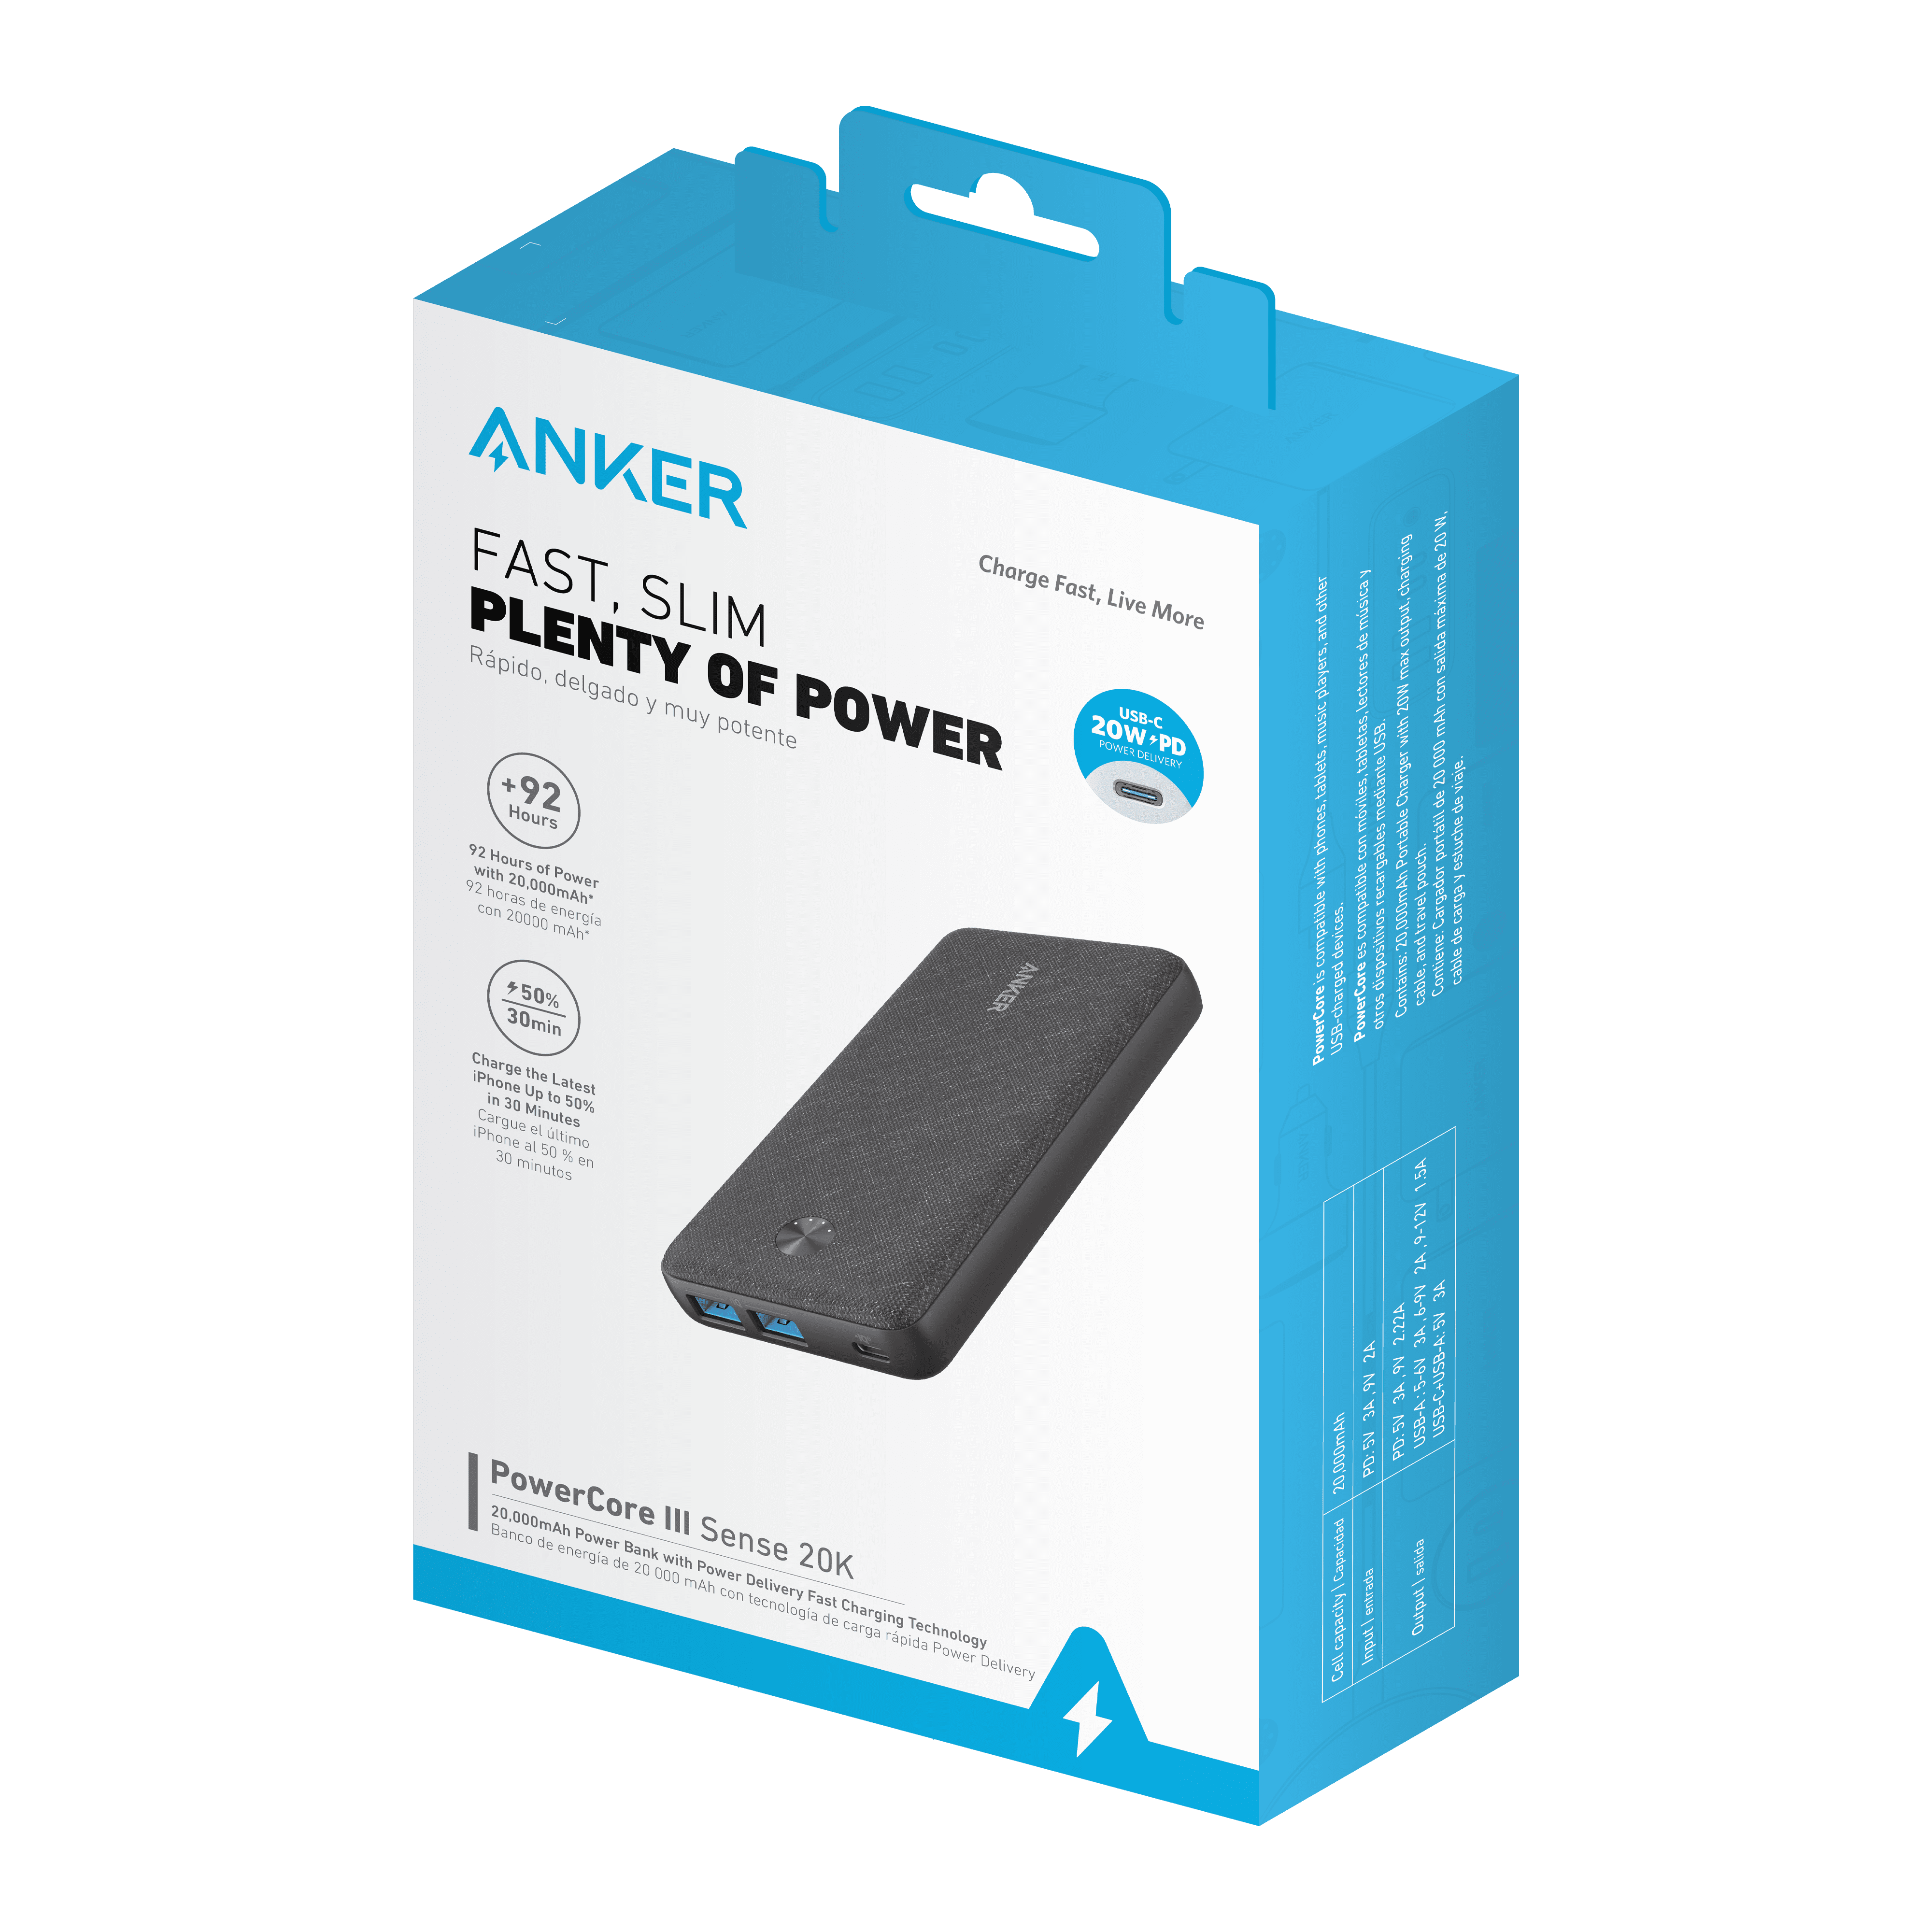 Anker PowerCore III Sense 20K mAh 20W PD USB-C Portable Battery